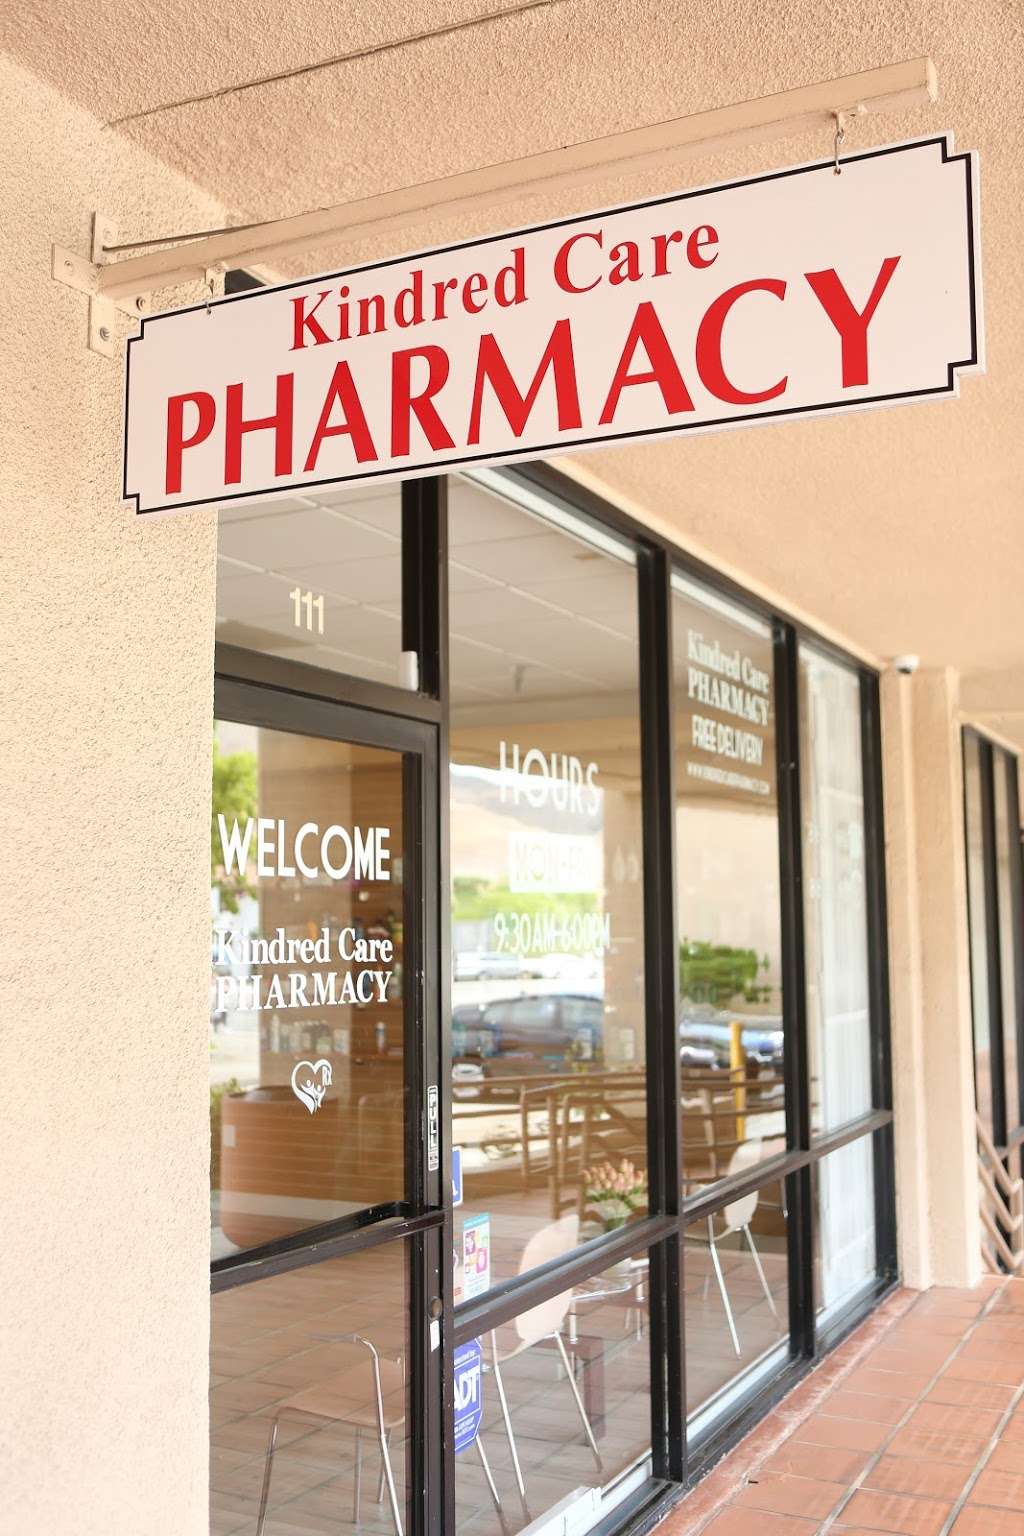 Kindred Care Pharmacy | 26500 Agoura Rd #111, Calabasas, CA 91302, USA | Phone: (818) 880-8816